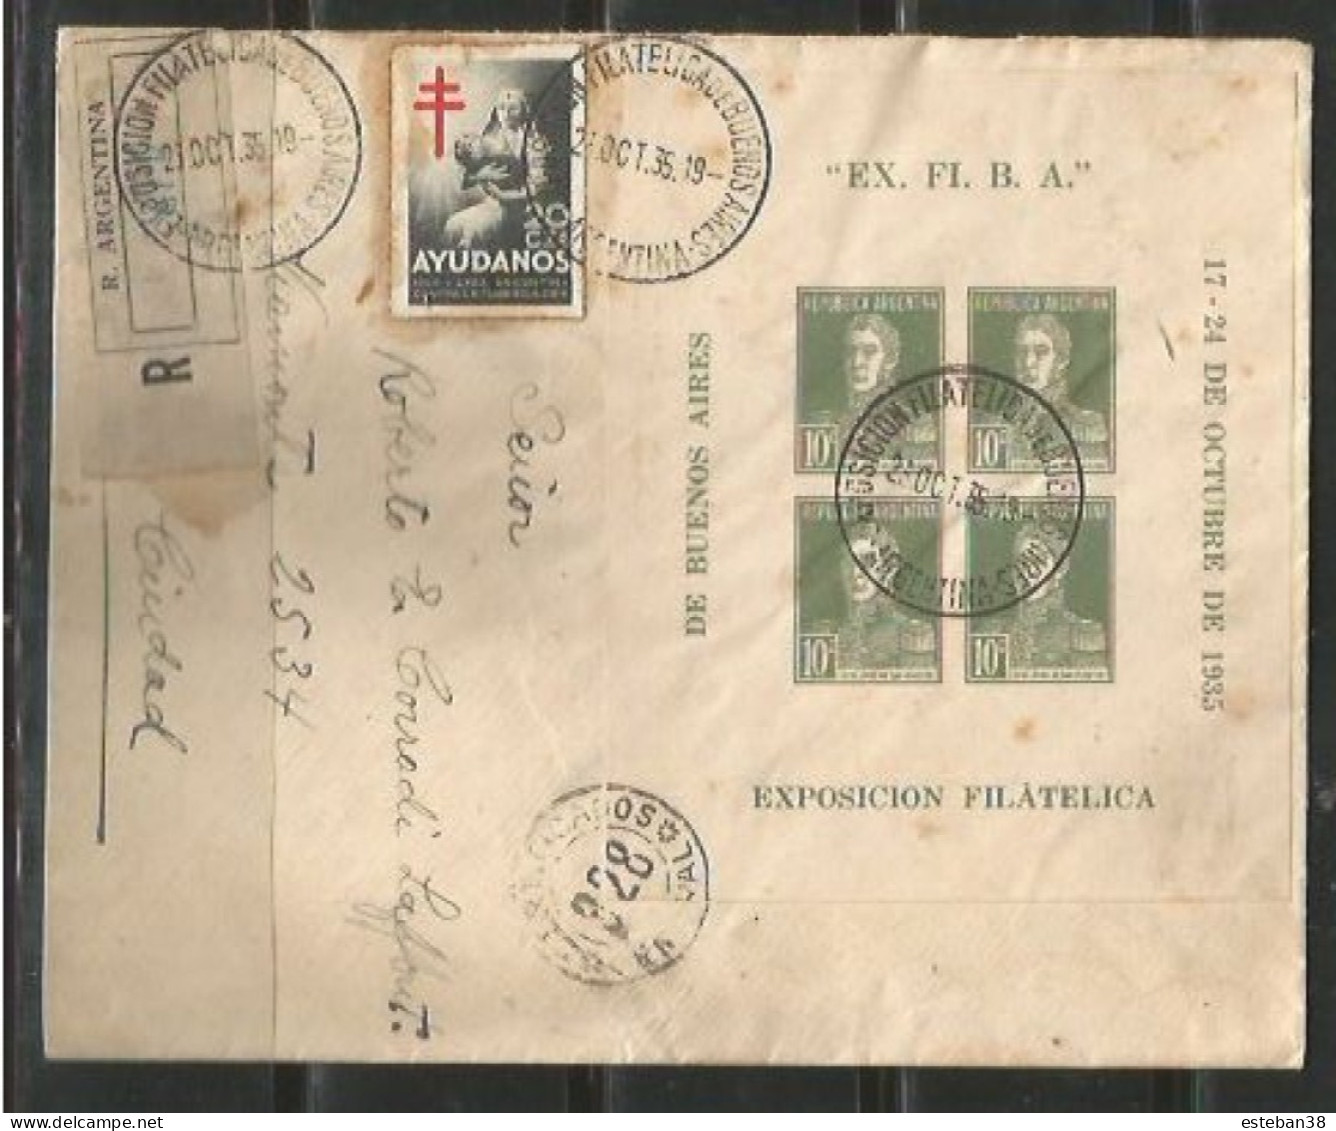 Sobre San Martin E.X.F.I.B.A - Postal Stationery